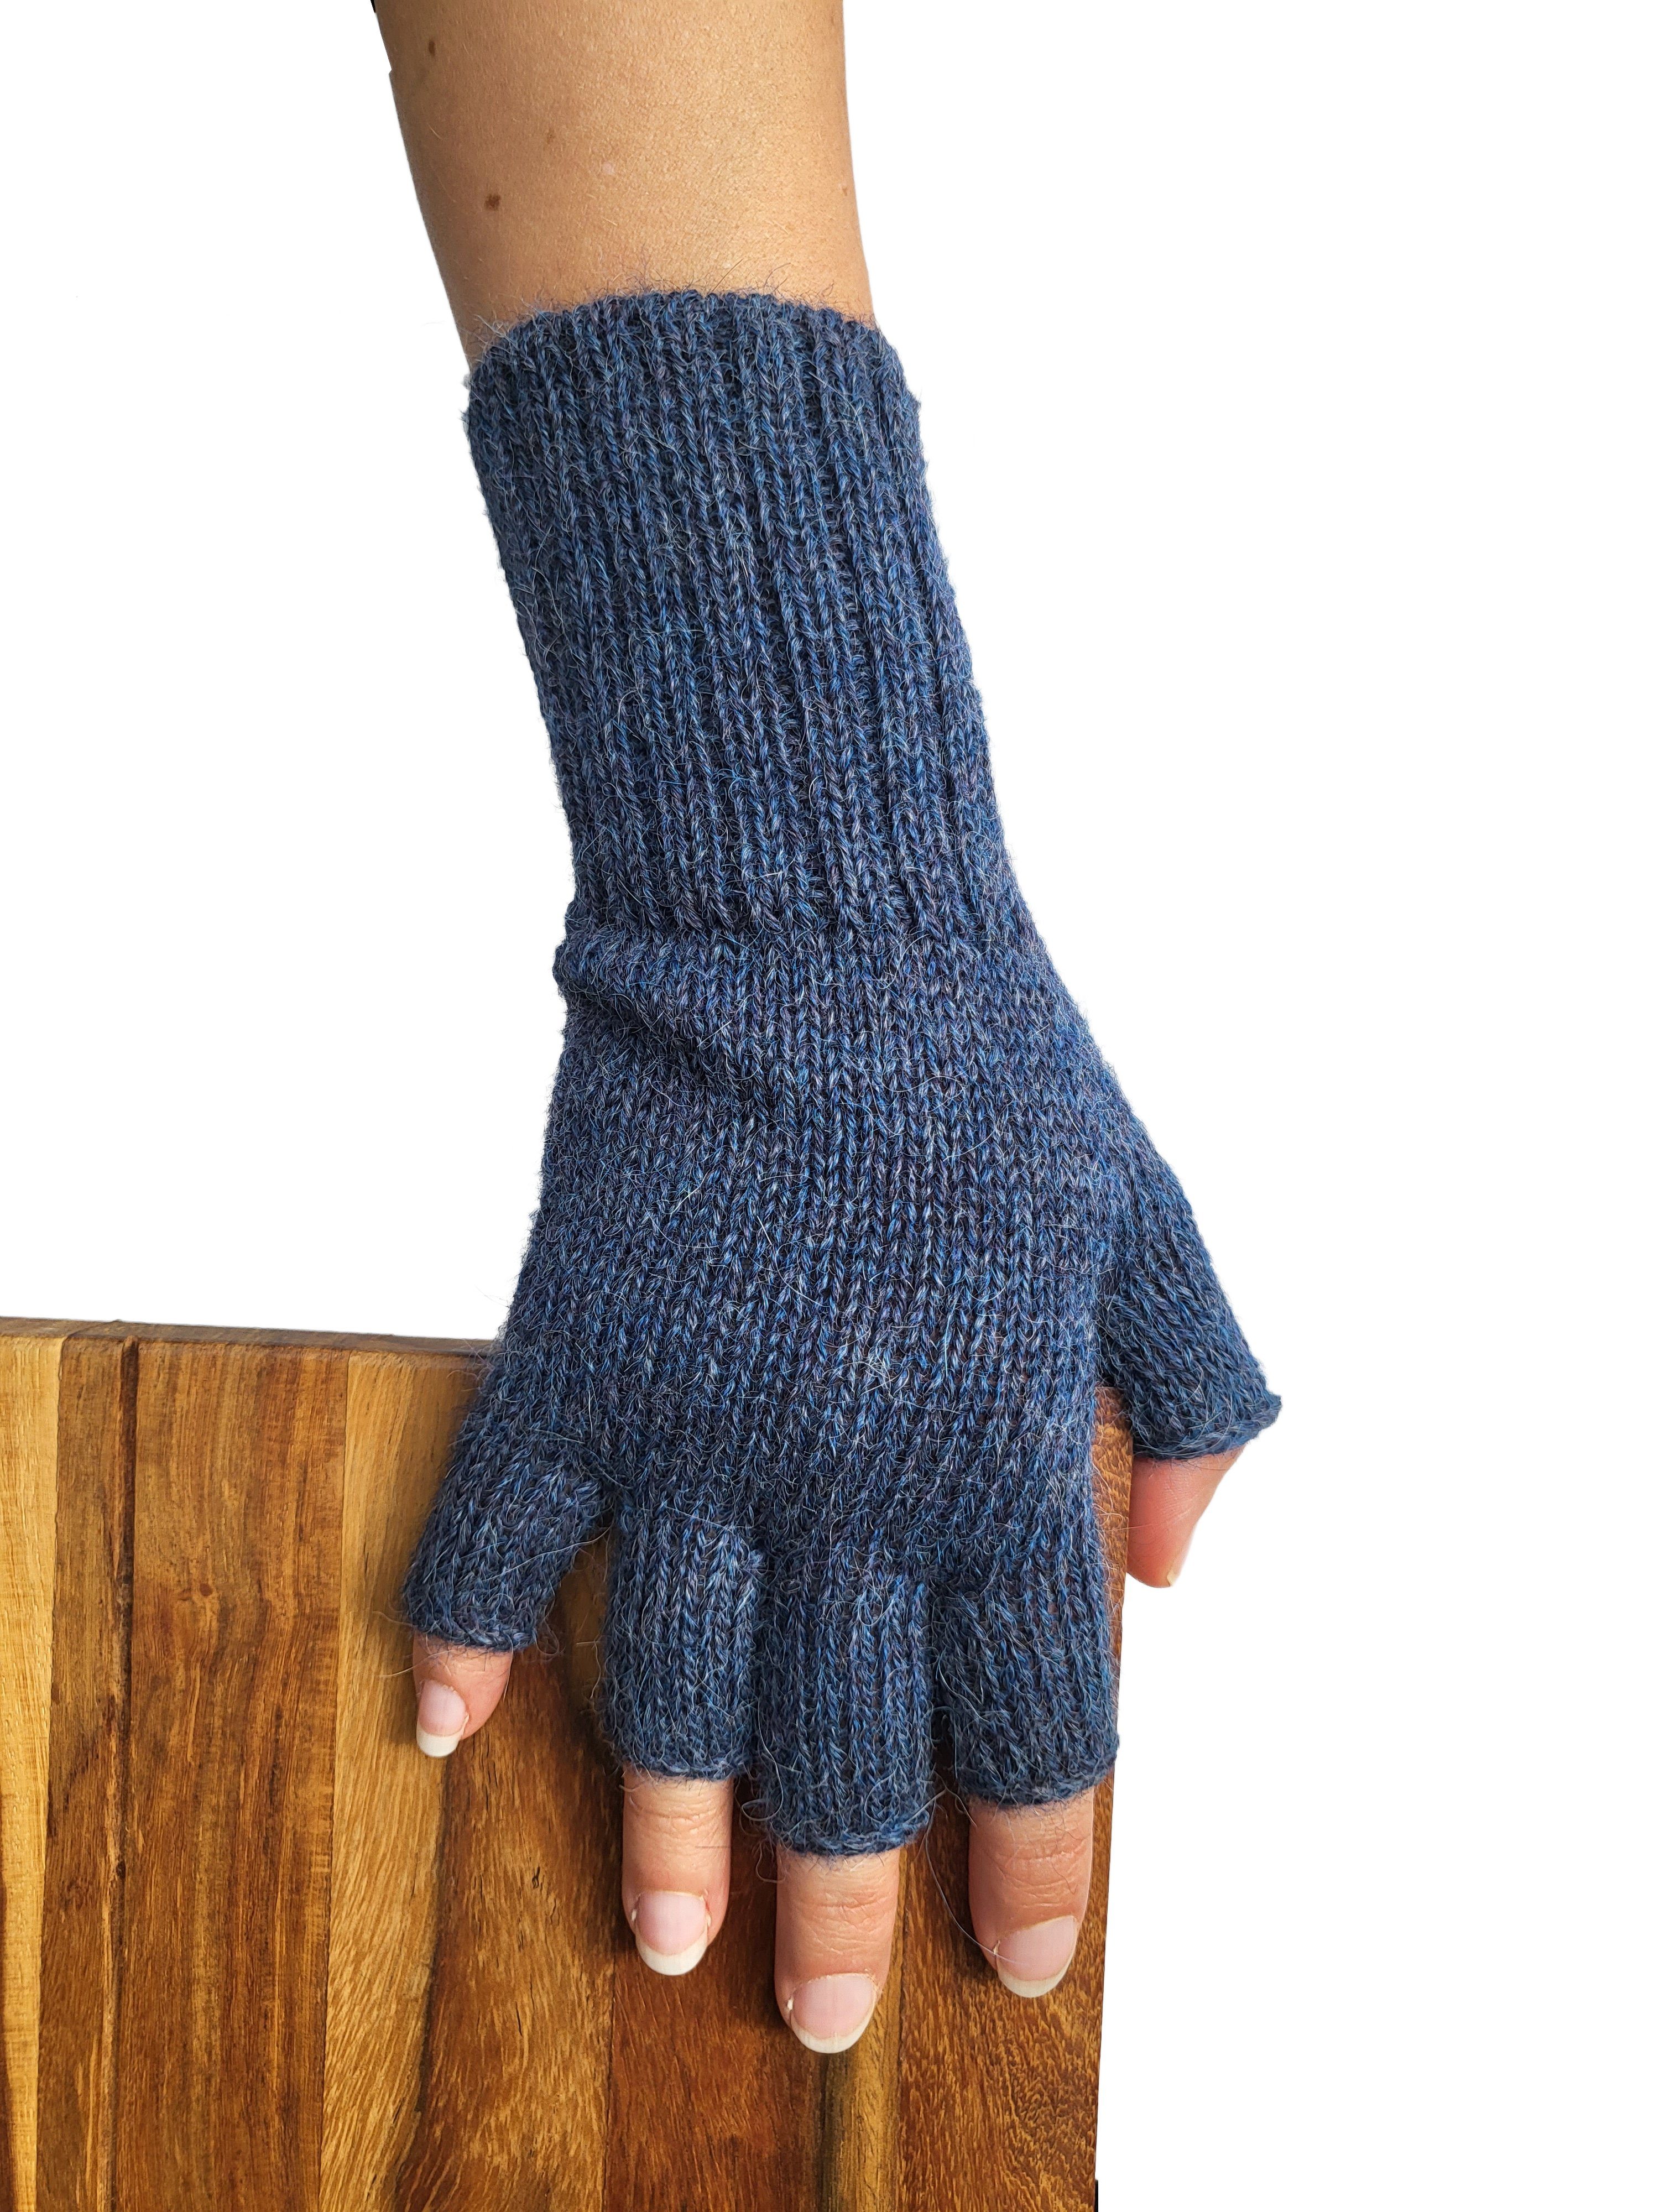 Strickhandschuhe Guantiless Alpaka Halb-Fingerhandschuhe Posh Gear blau dunkel